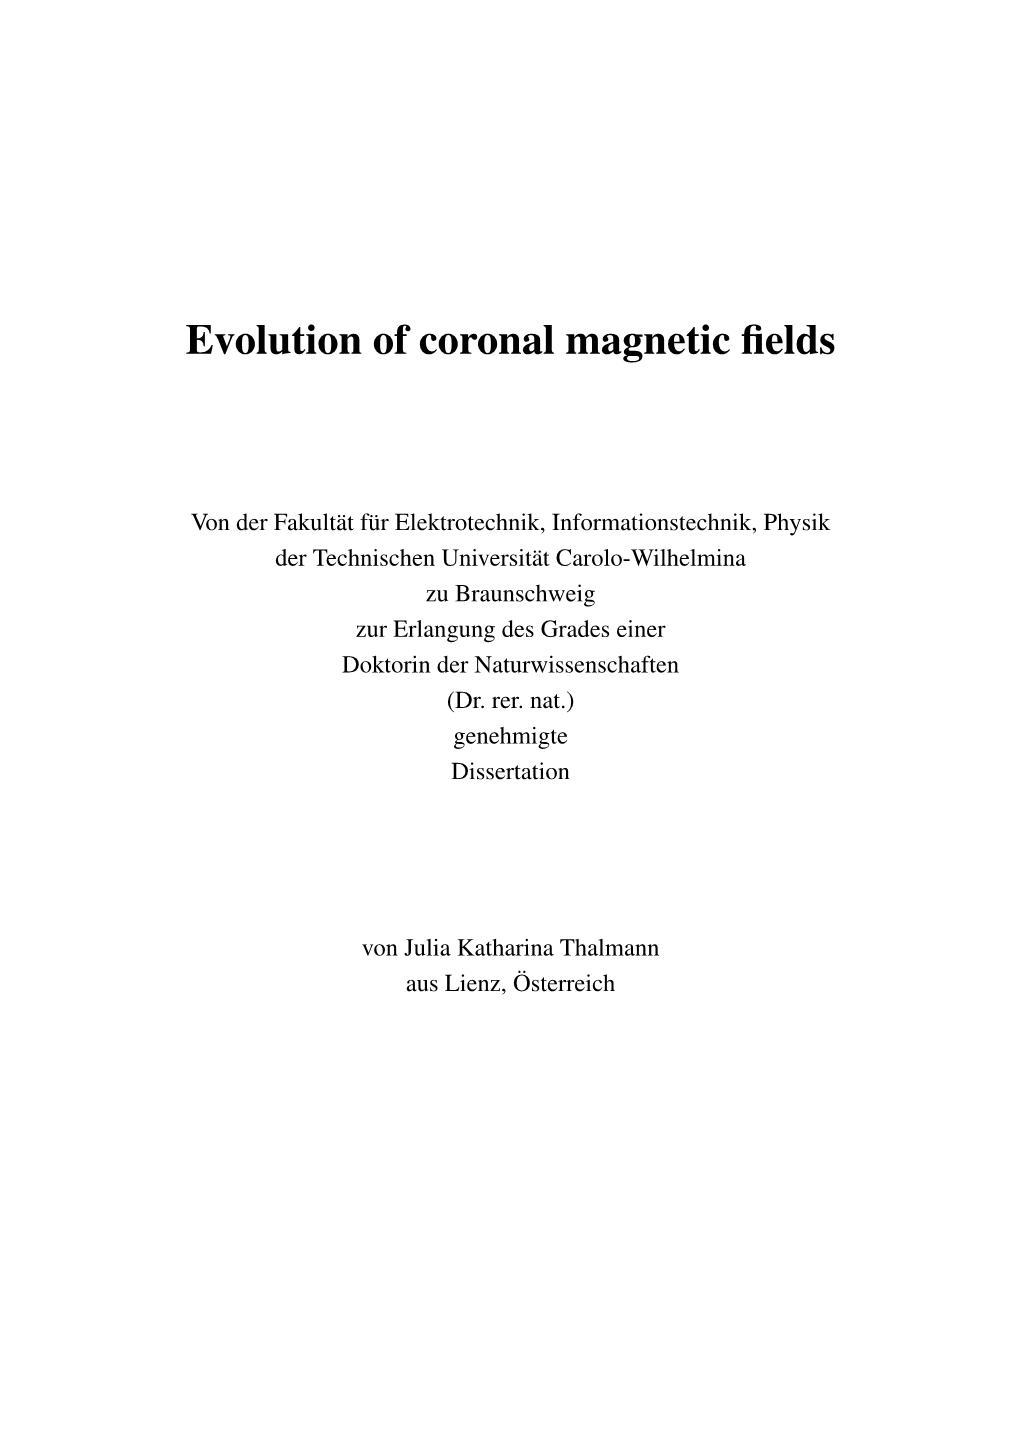 Evolution of Coronal Magnetic Fields